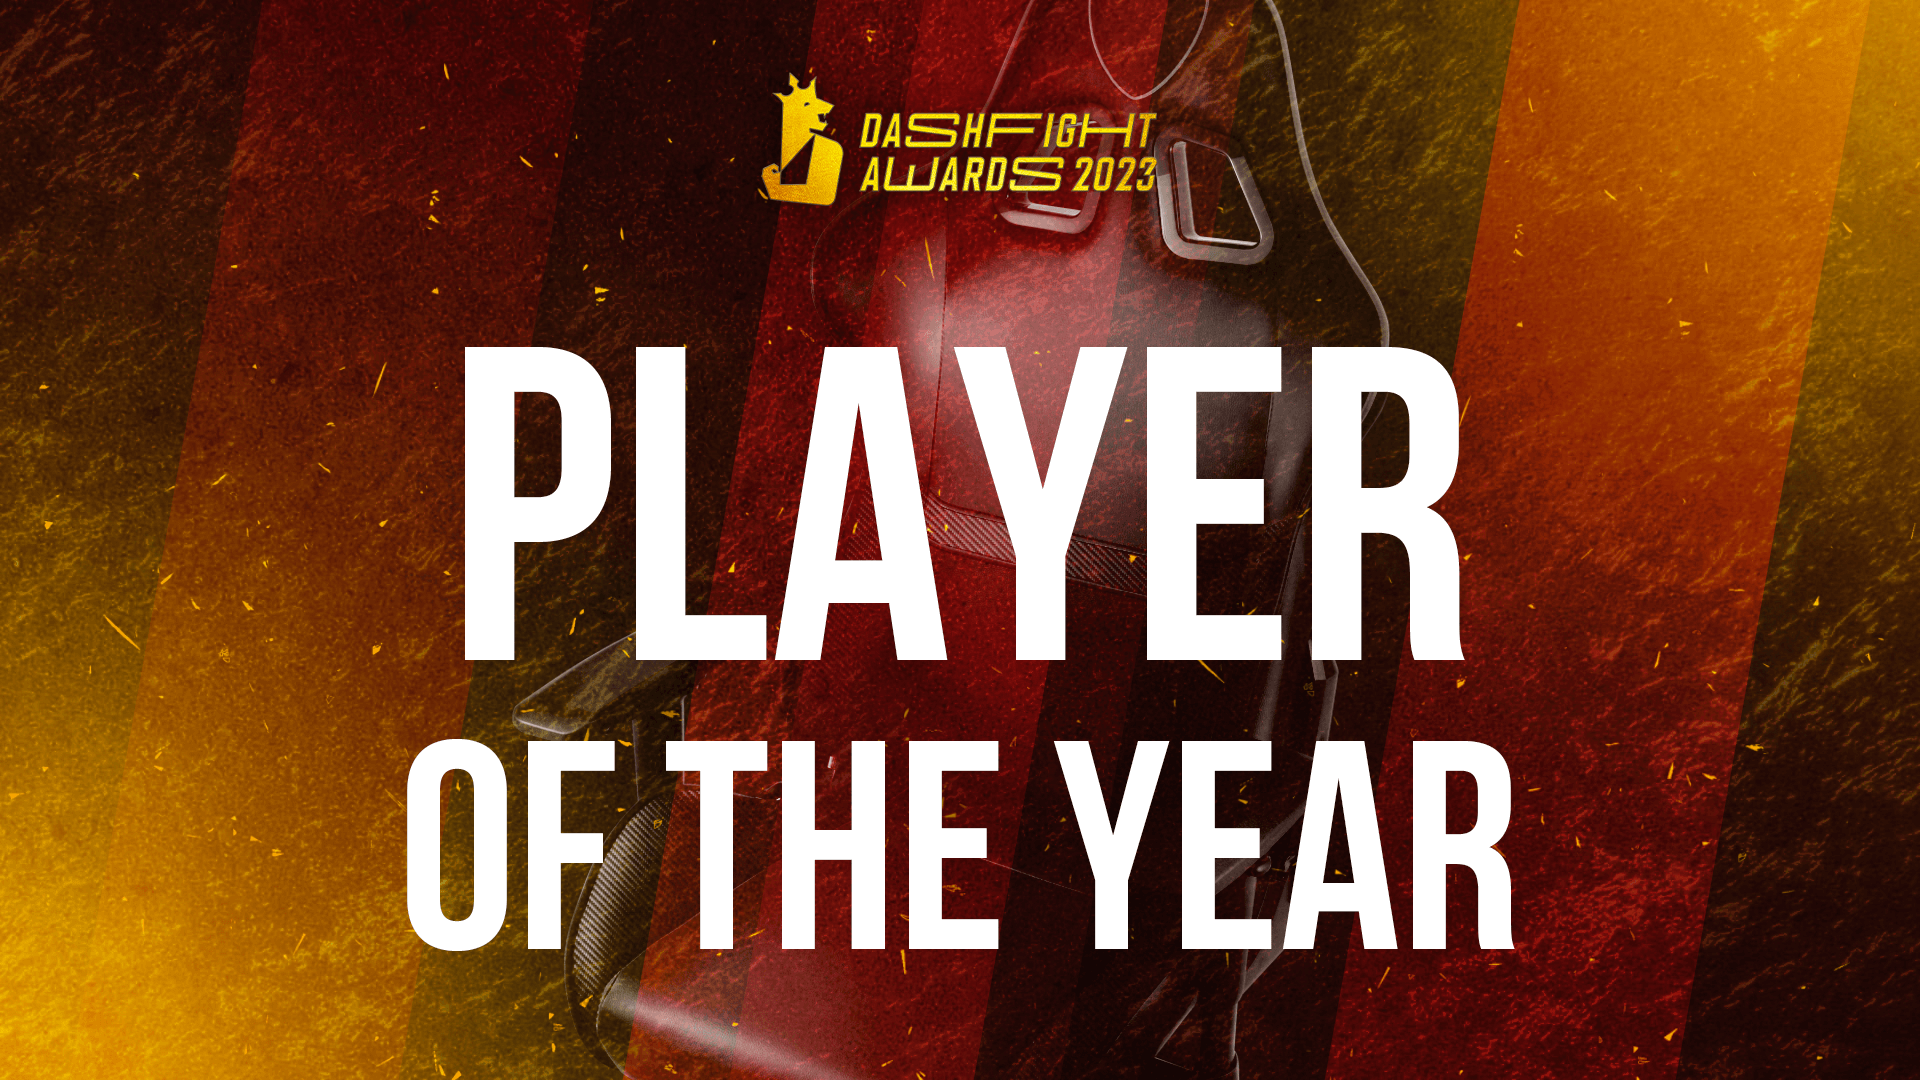 DashFight Awards 2023: Player of the Year